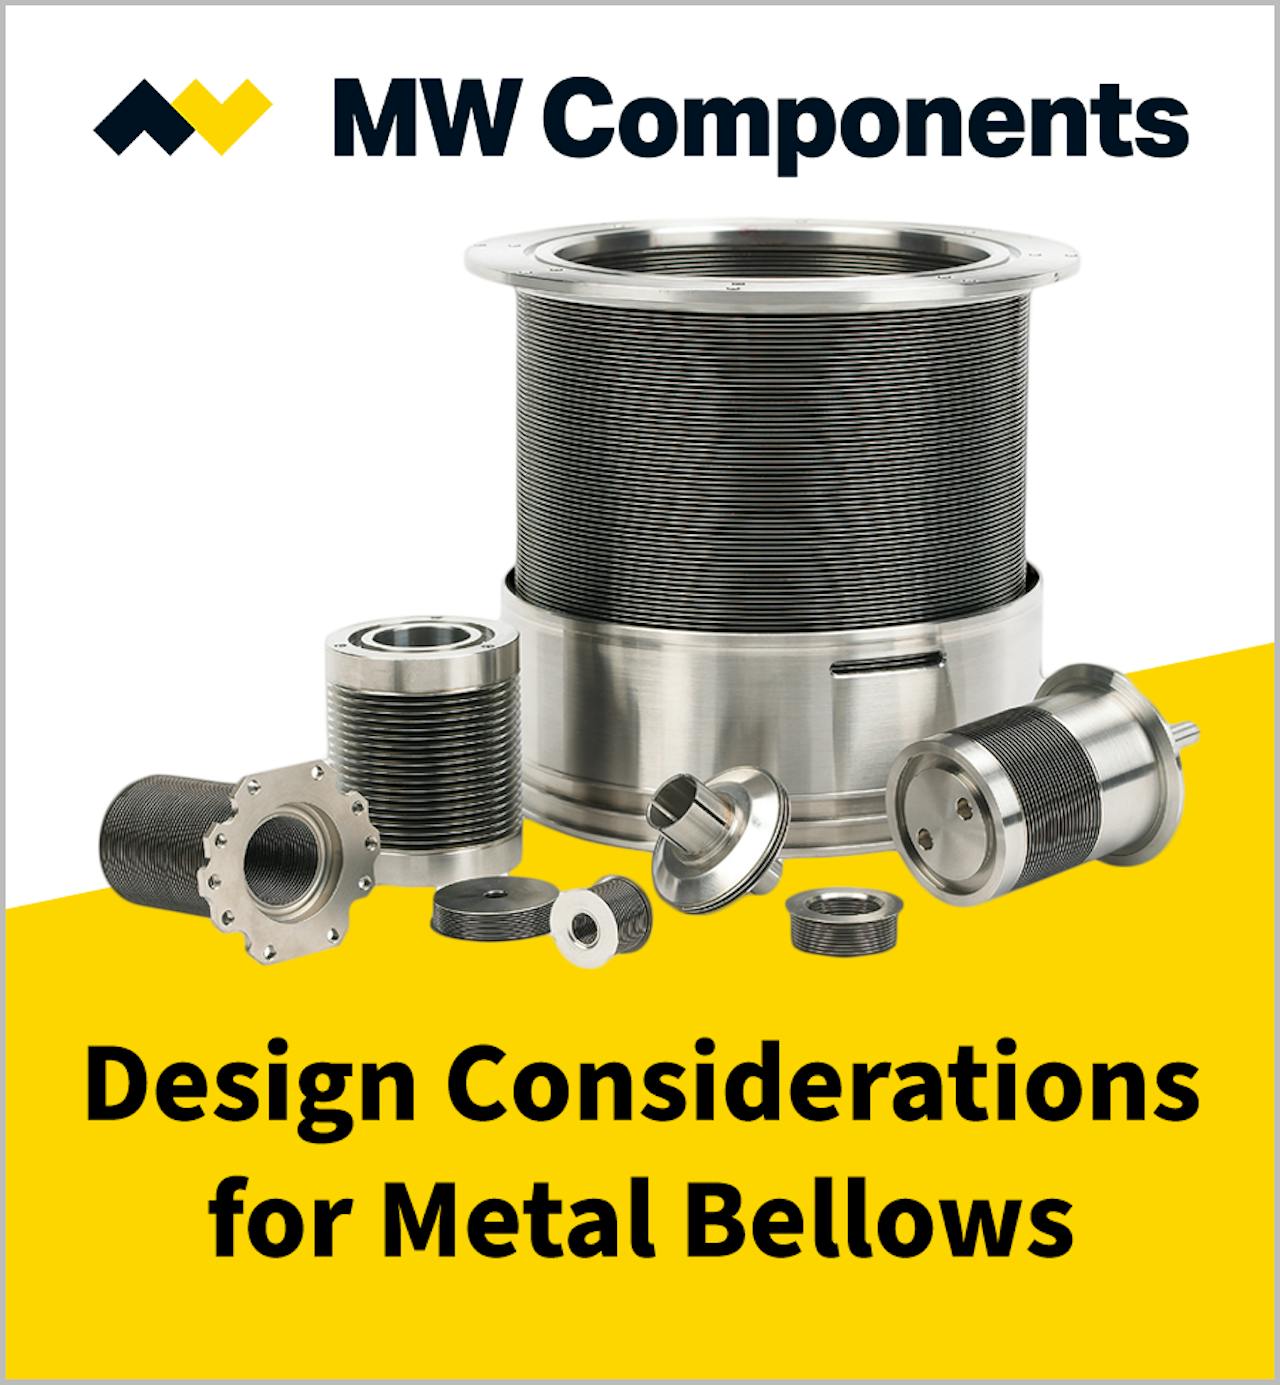 webinar thumbnail - Design considerations for metal bellows